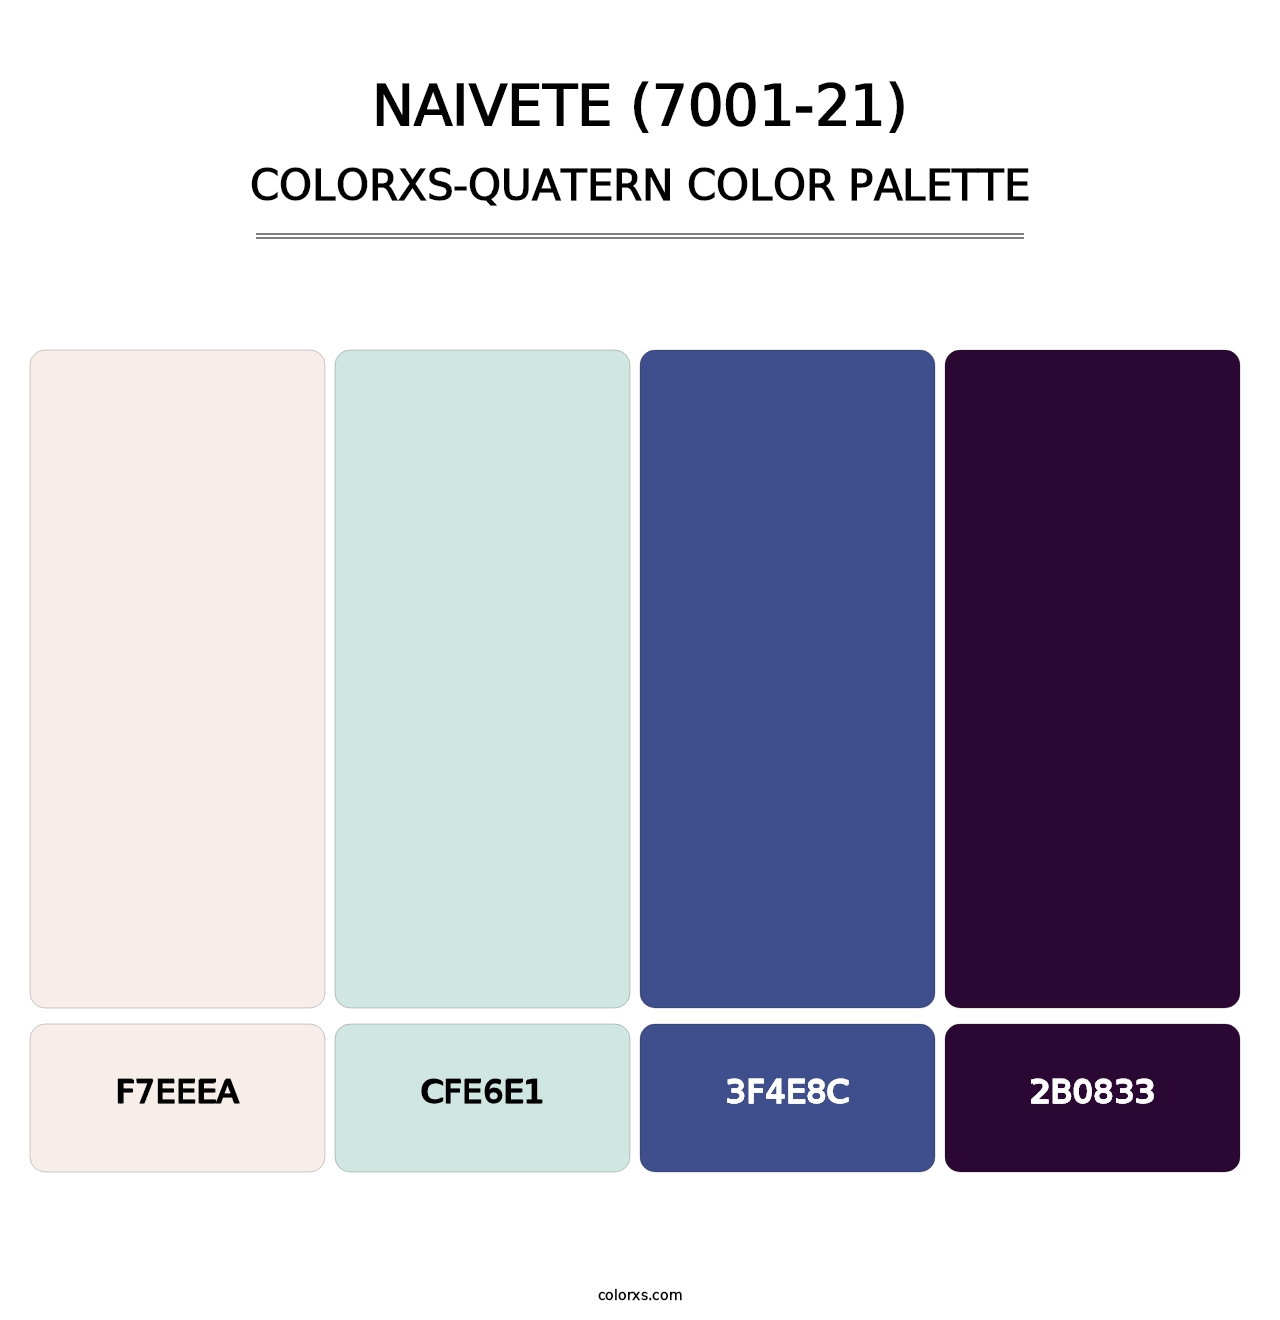 Naivete (7001-21) - Colorxs Quatern Palette